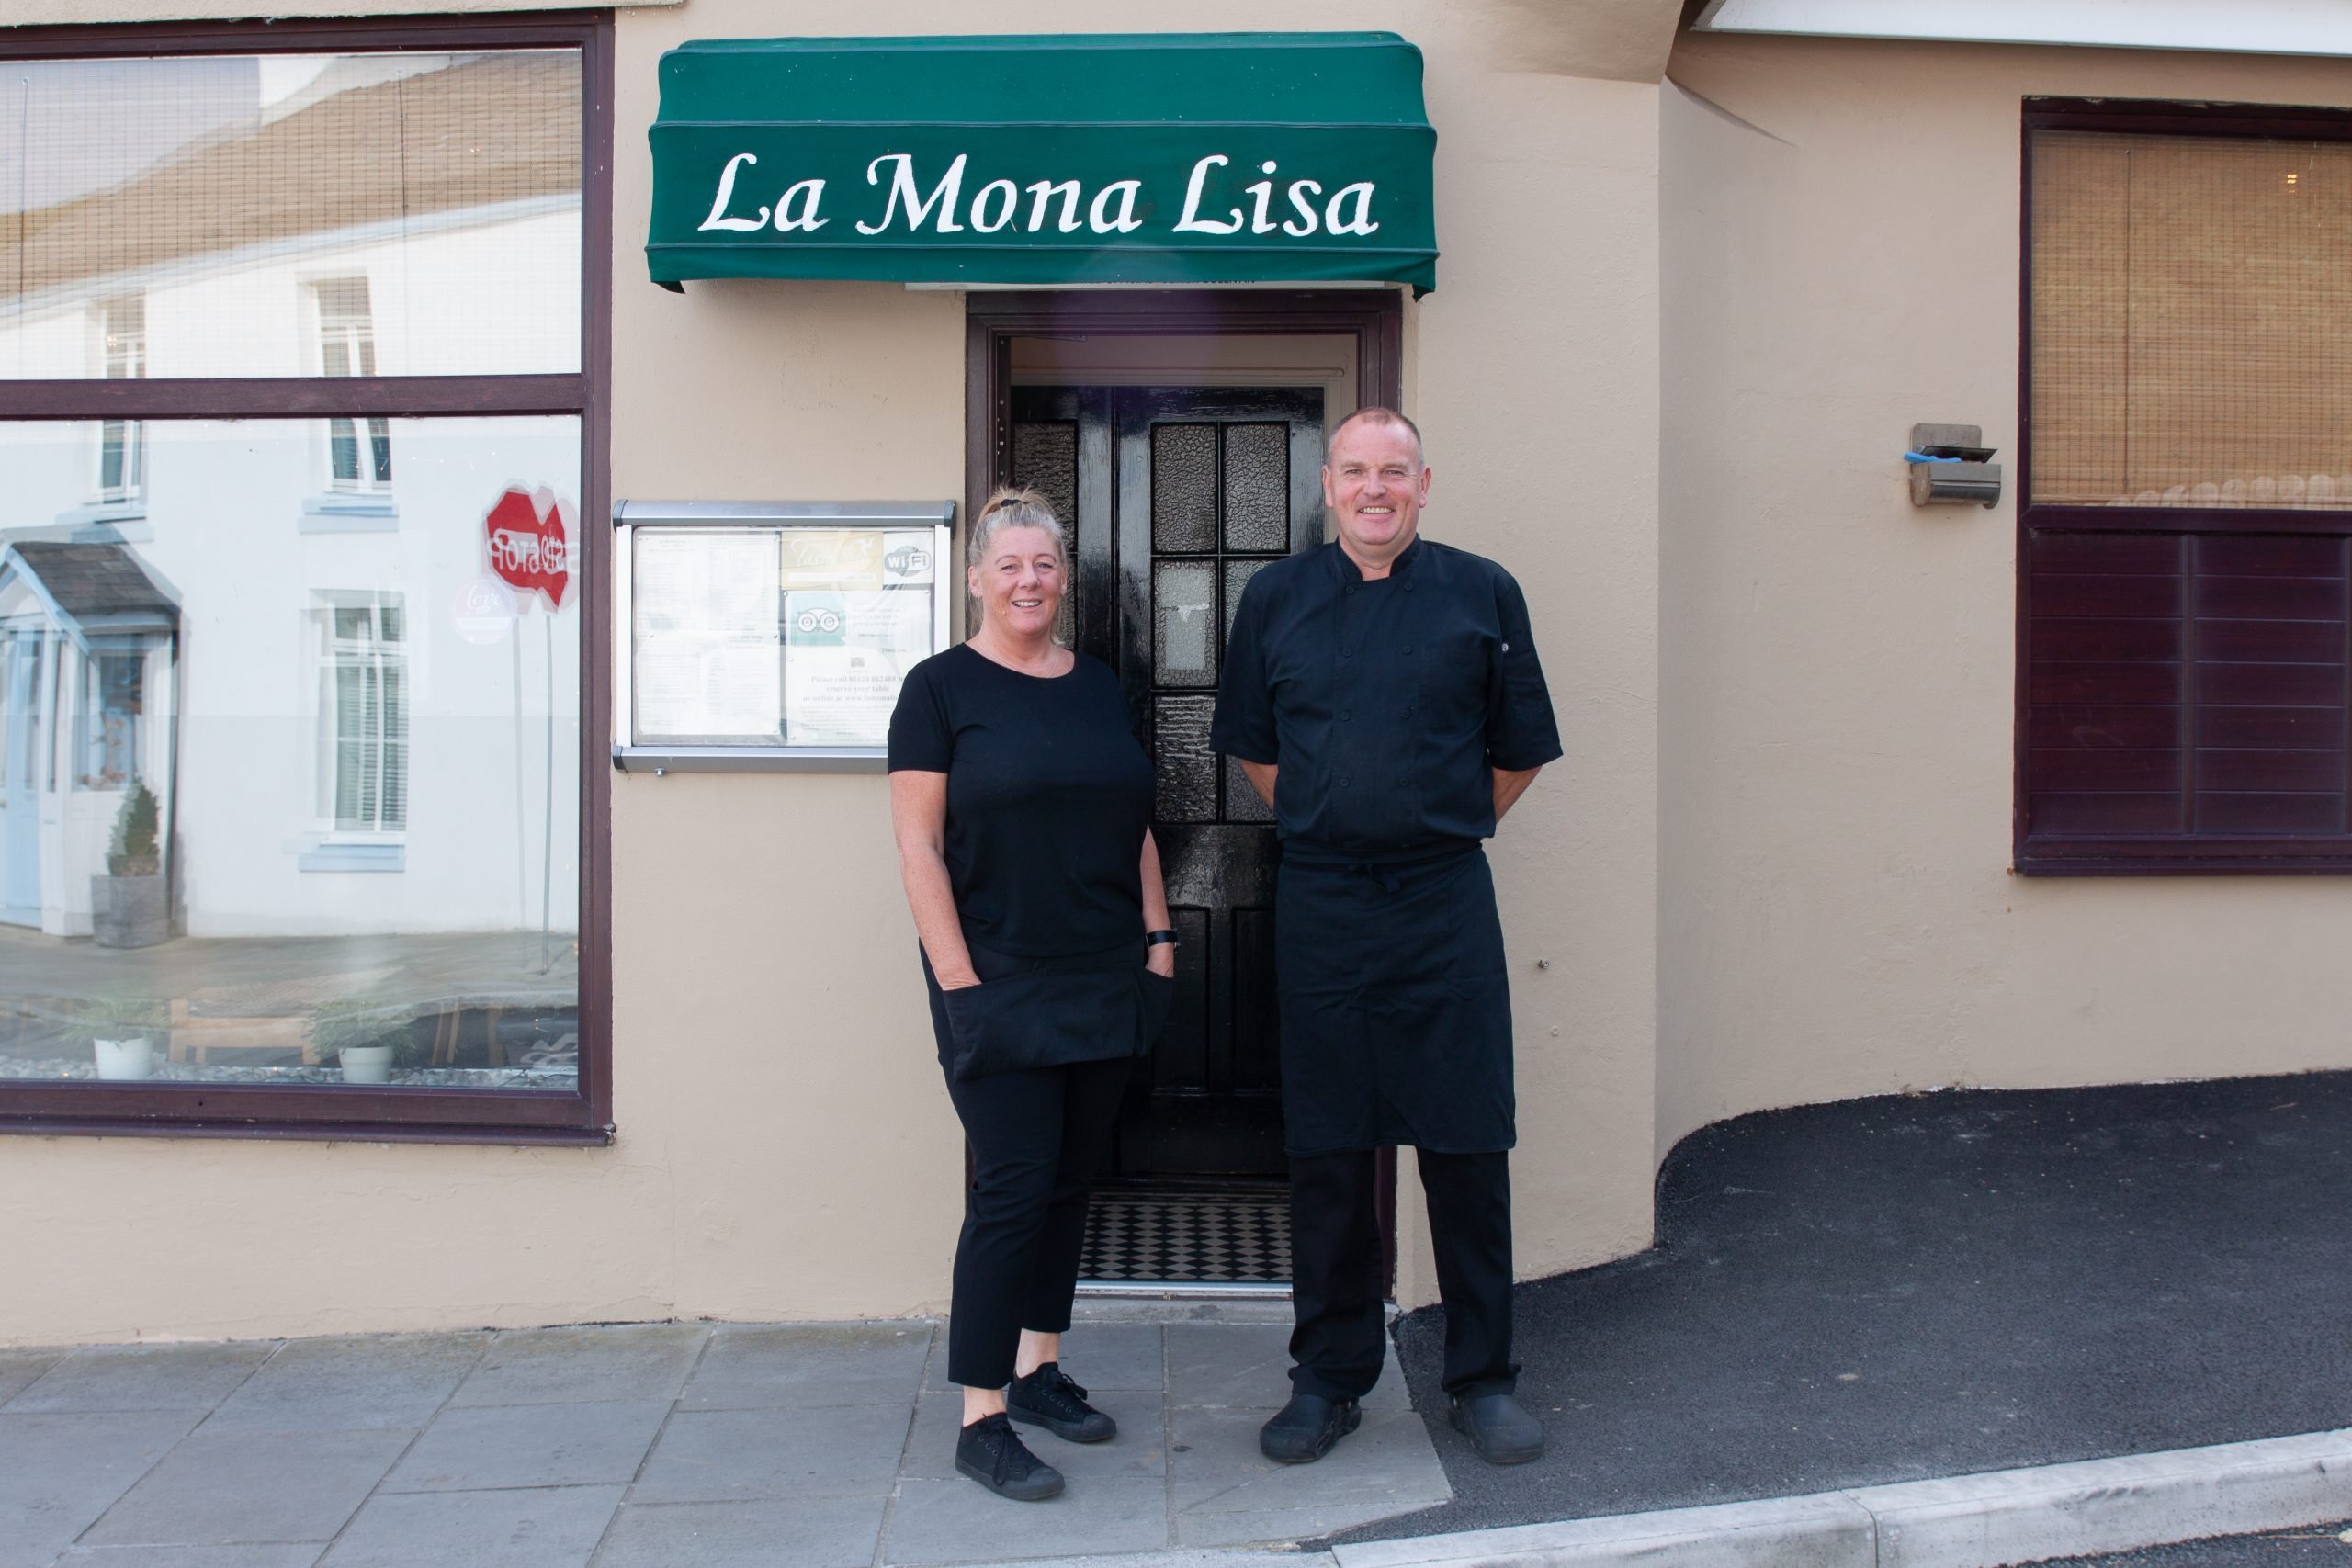 La Mona Lisa Glen Road, Laxey IM4 7AB